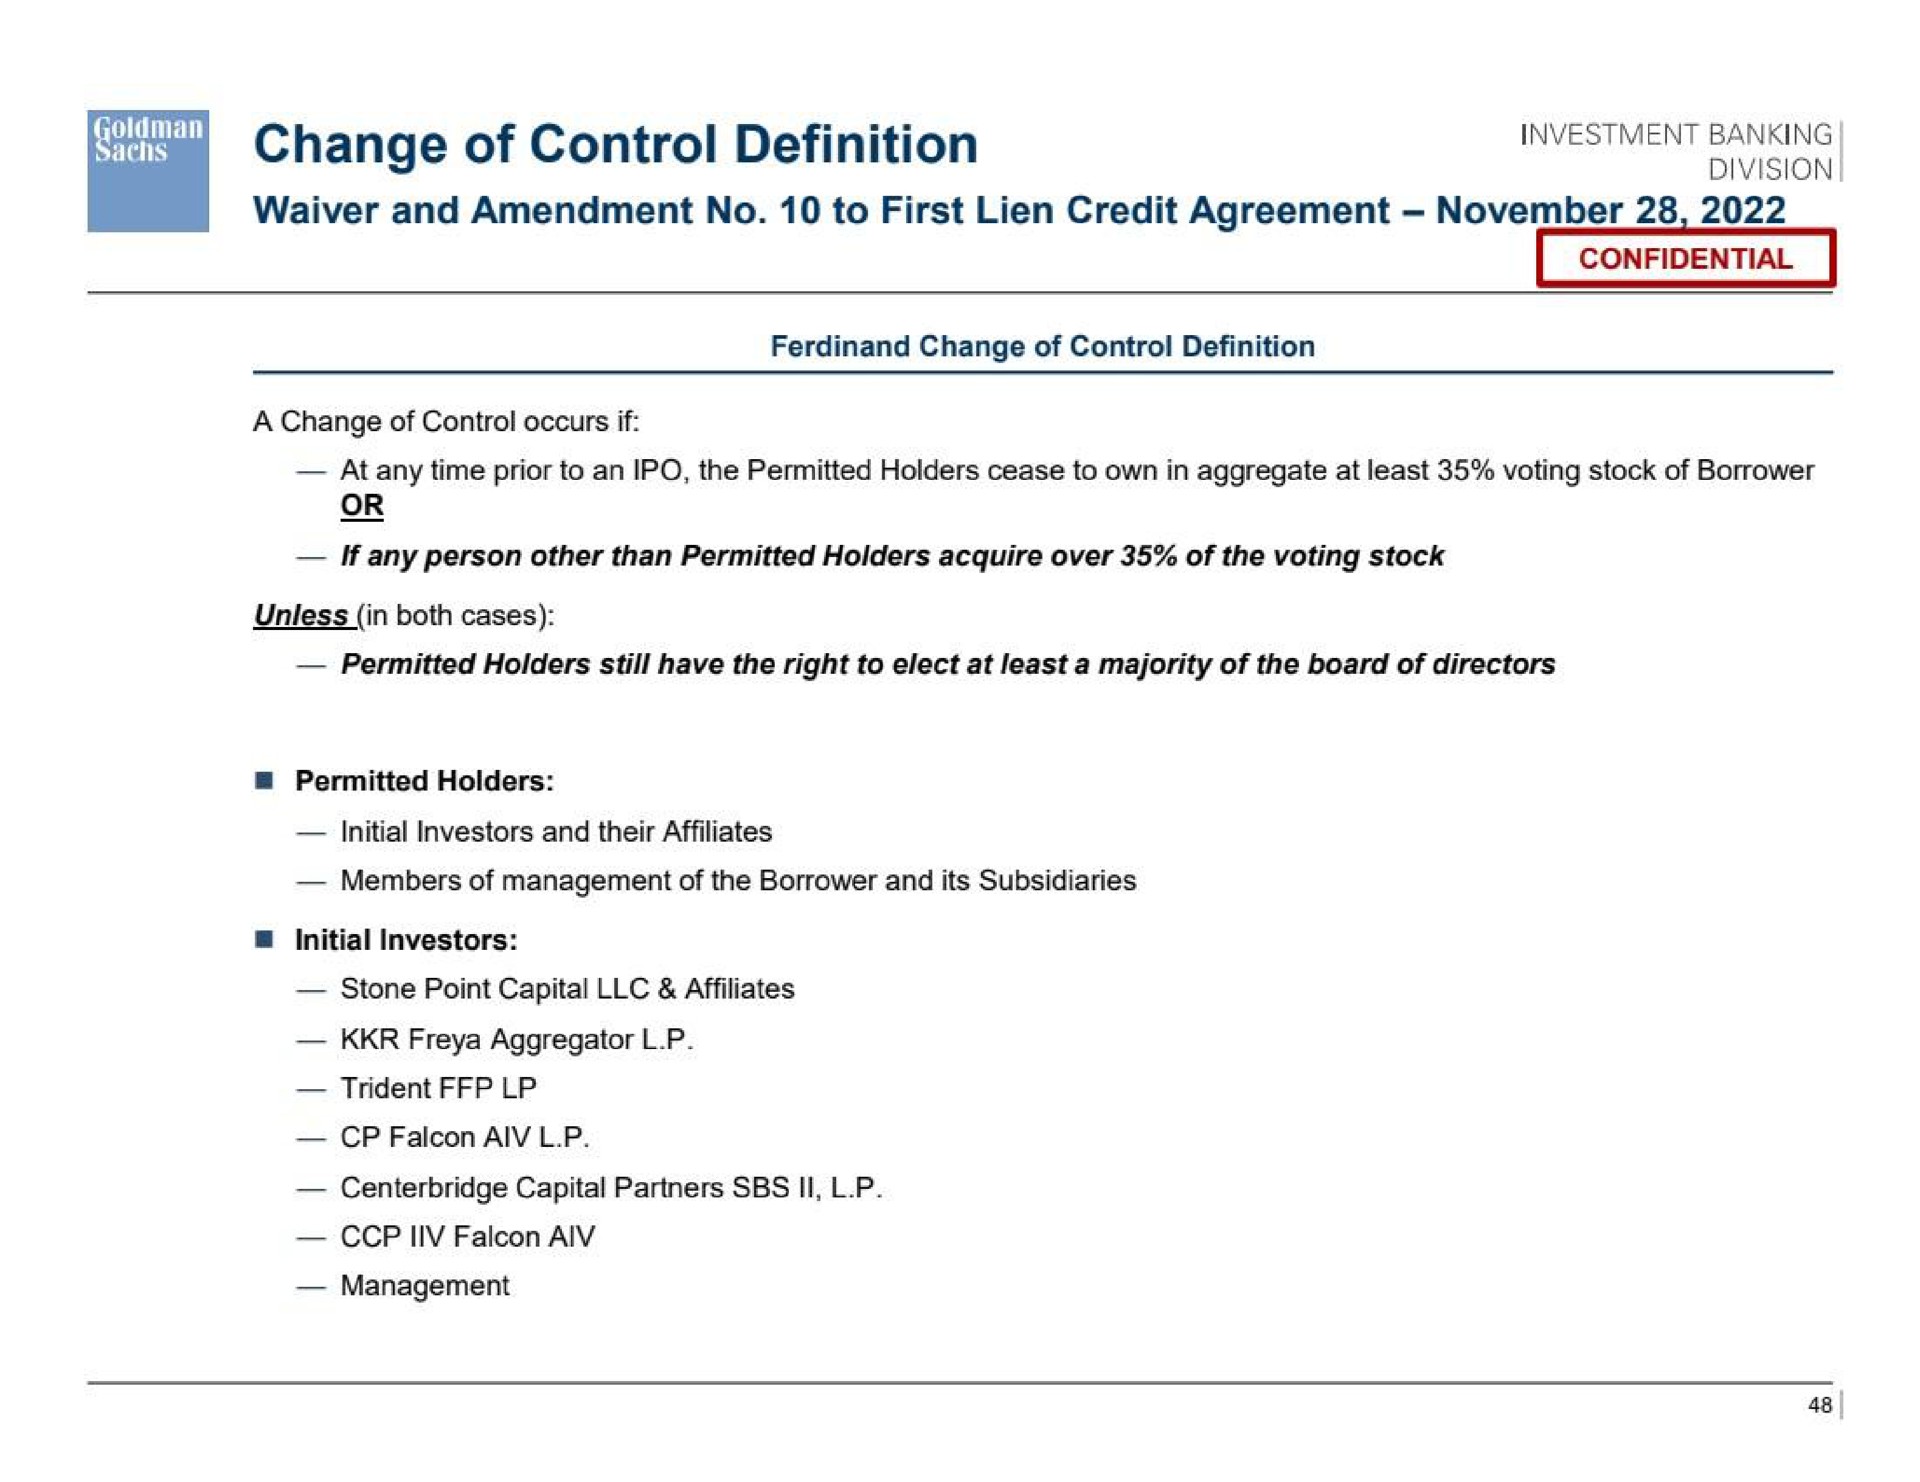 change of control definition division | Goldman Sachs